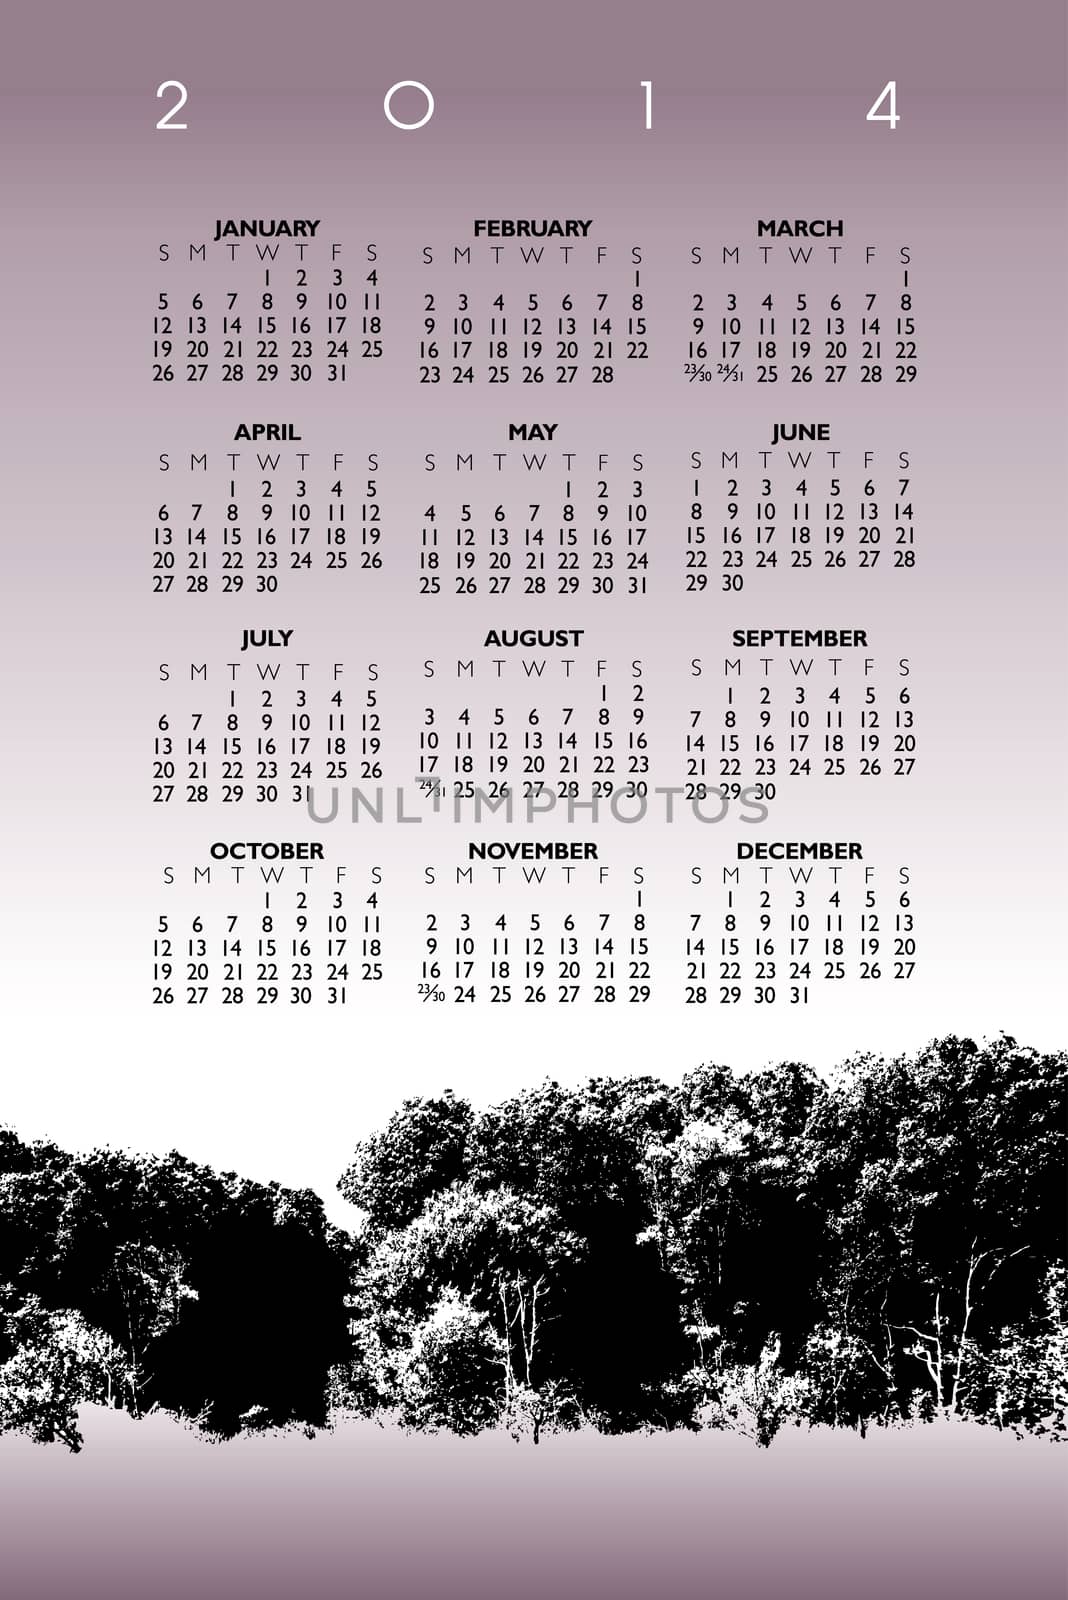 2014 Creative Apple Calendar for Print or Web